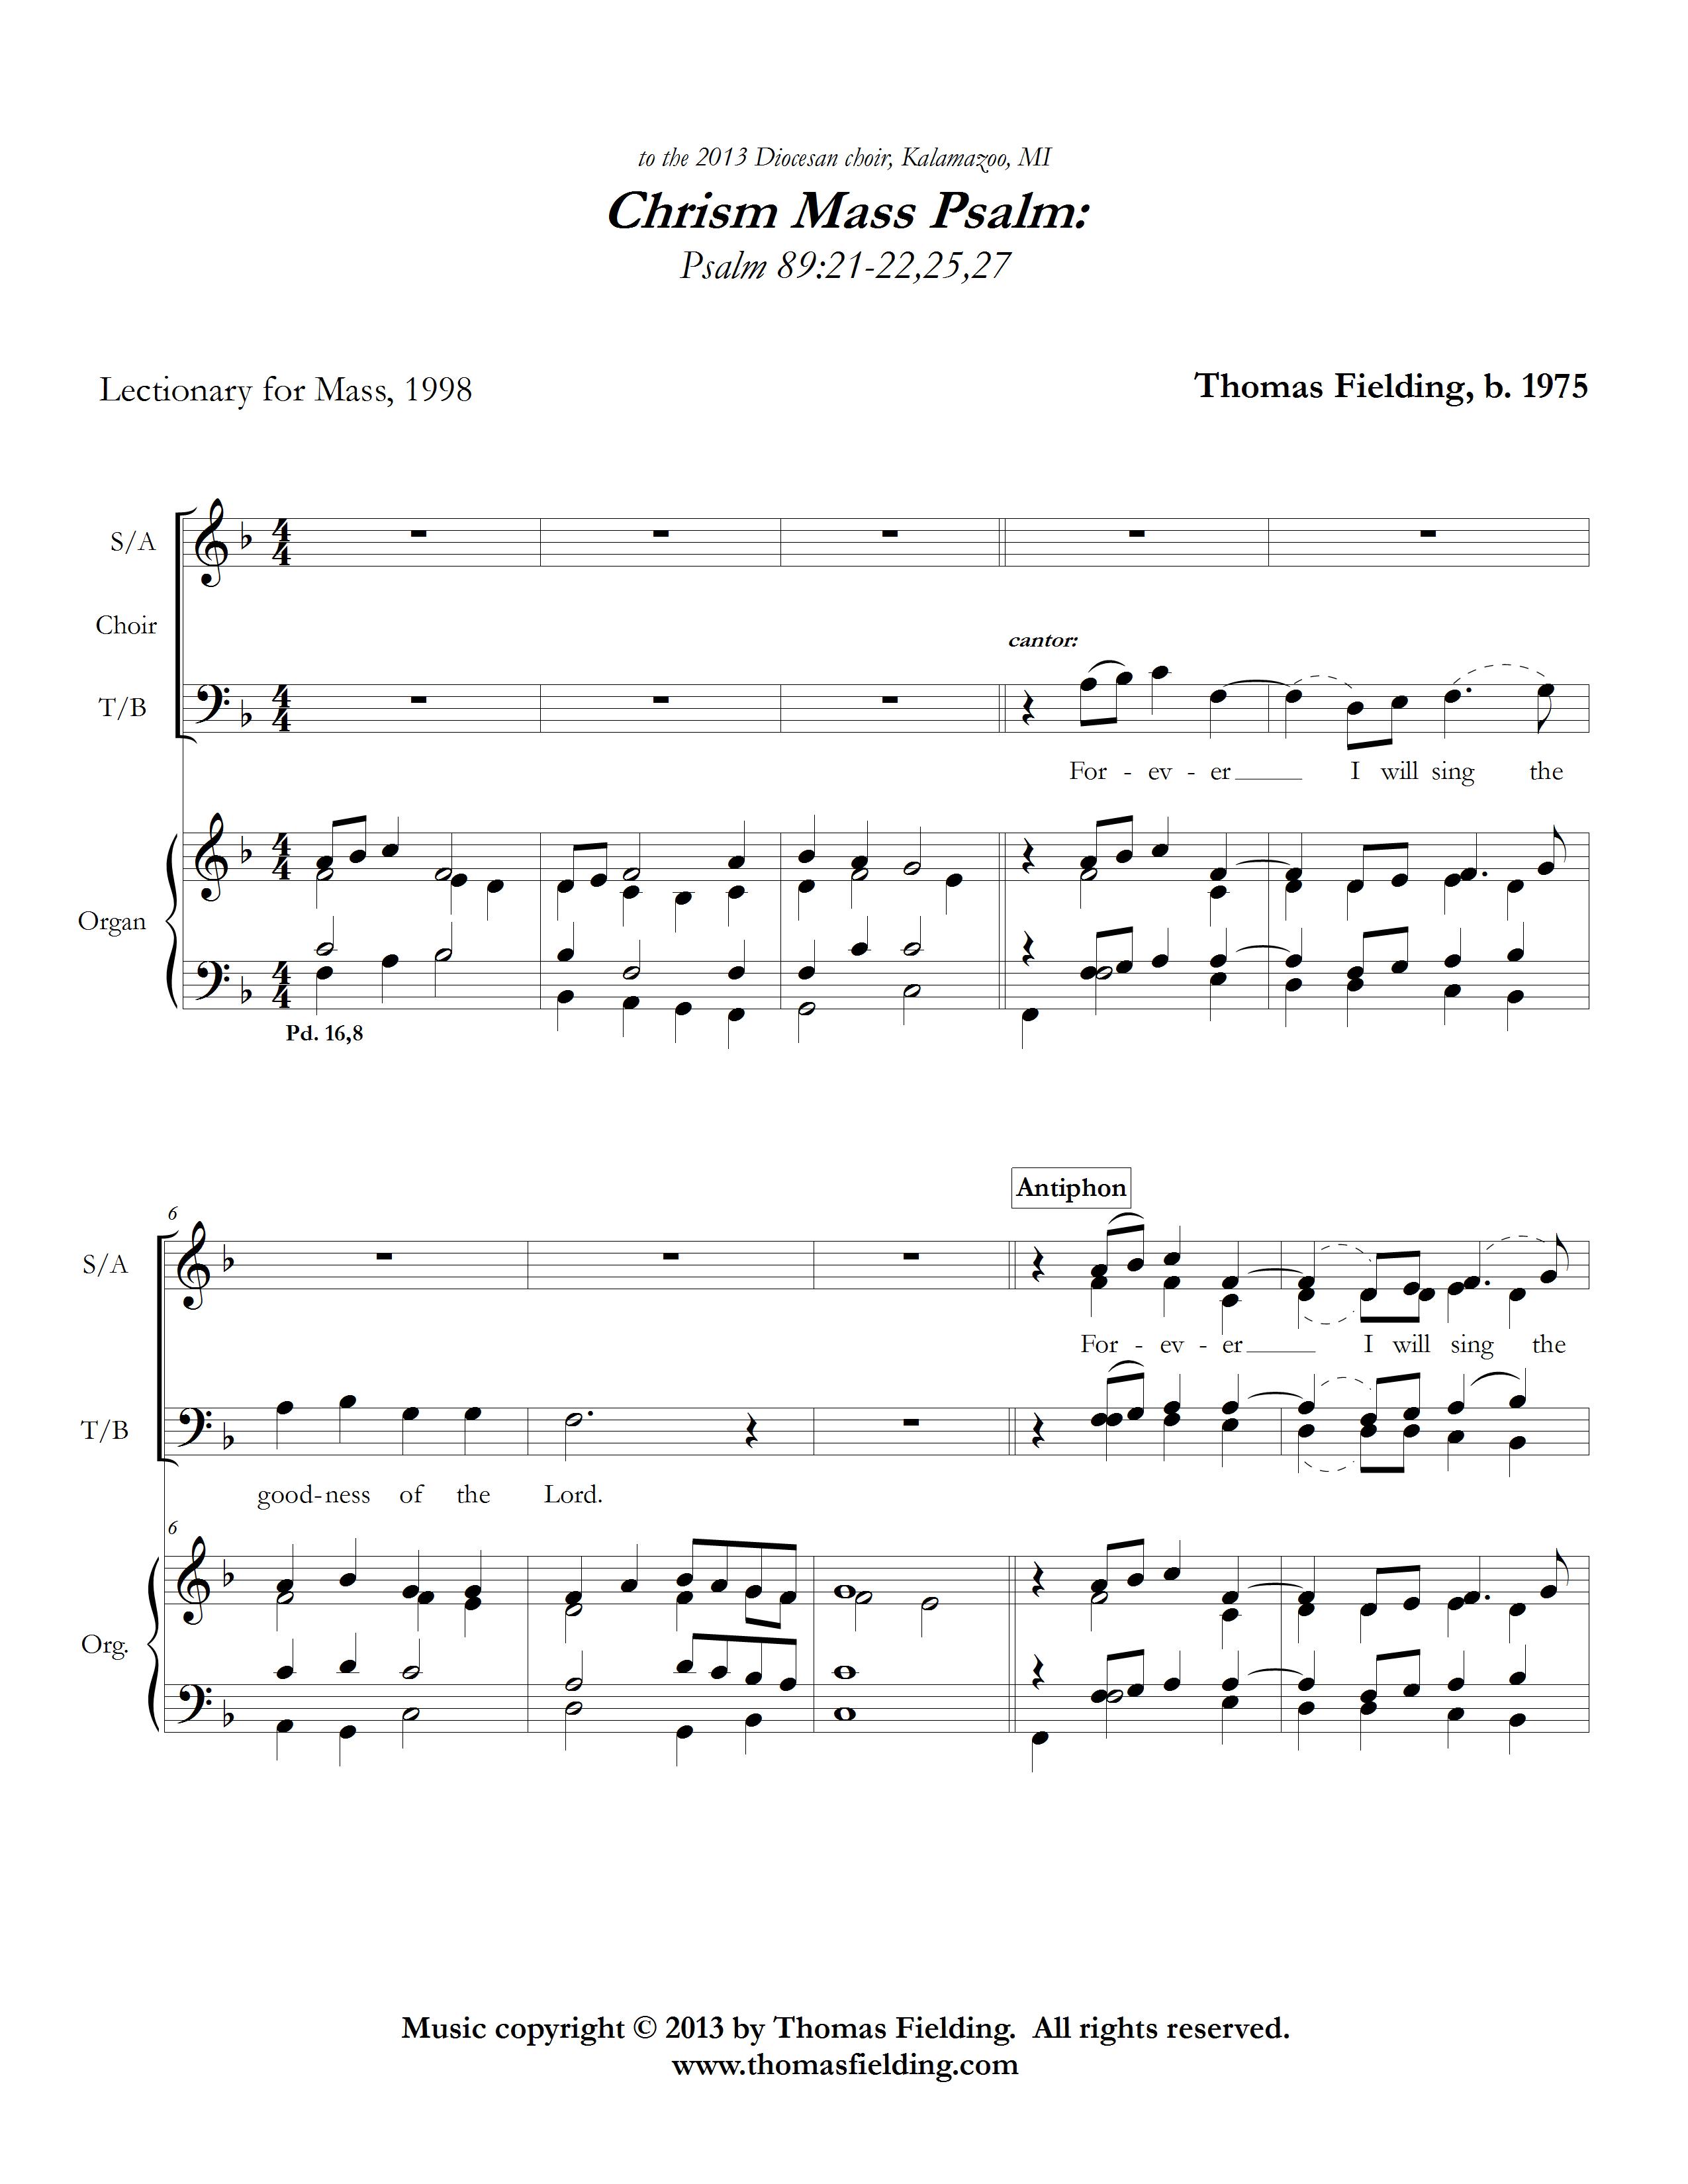 Chrism Mass Psalm page one